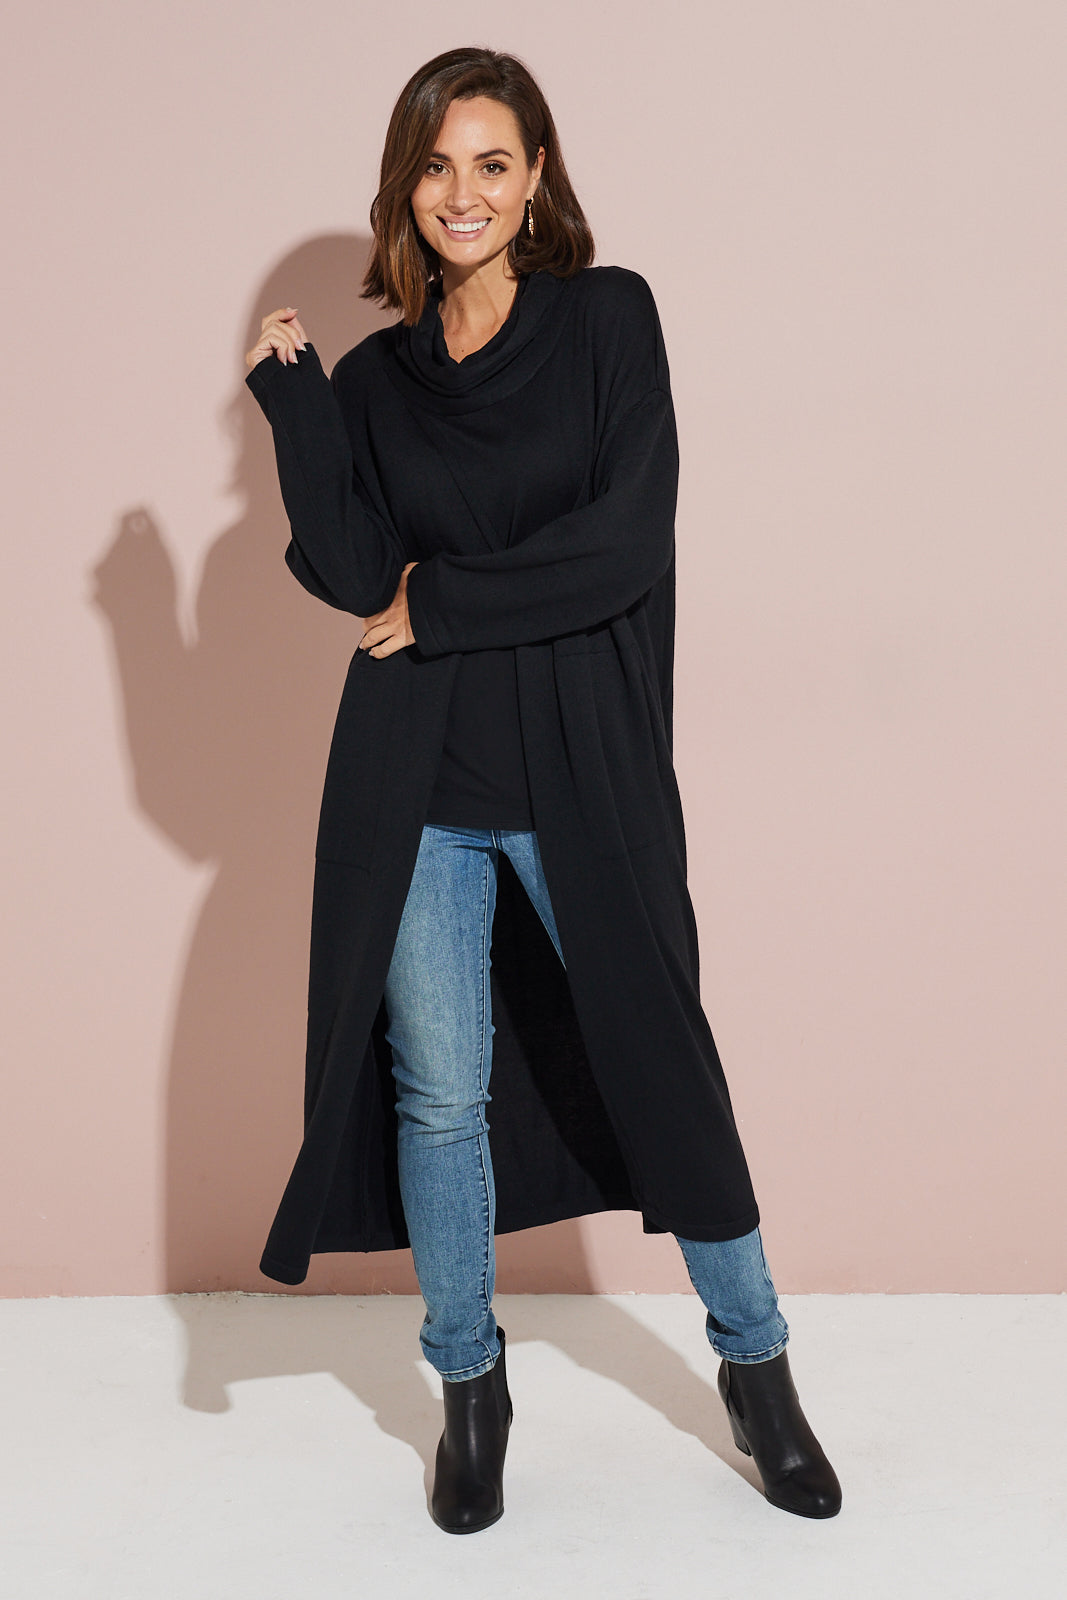 Kacela Knit Tunic - Black | Mature Women's Winter Style | TULIO Fashion